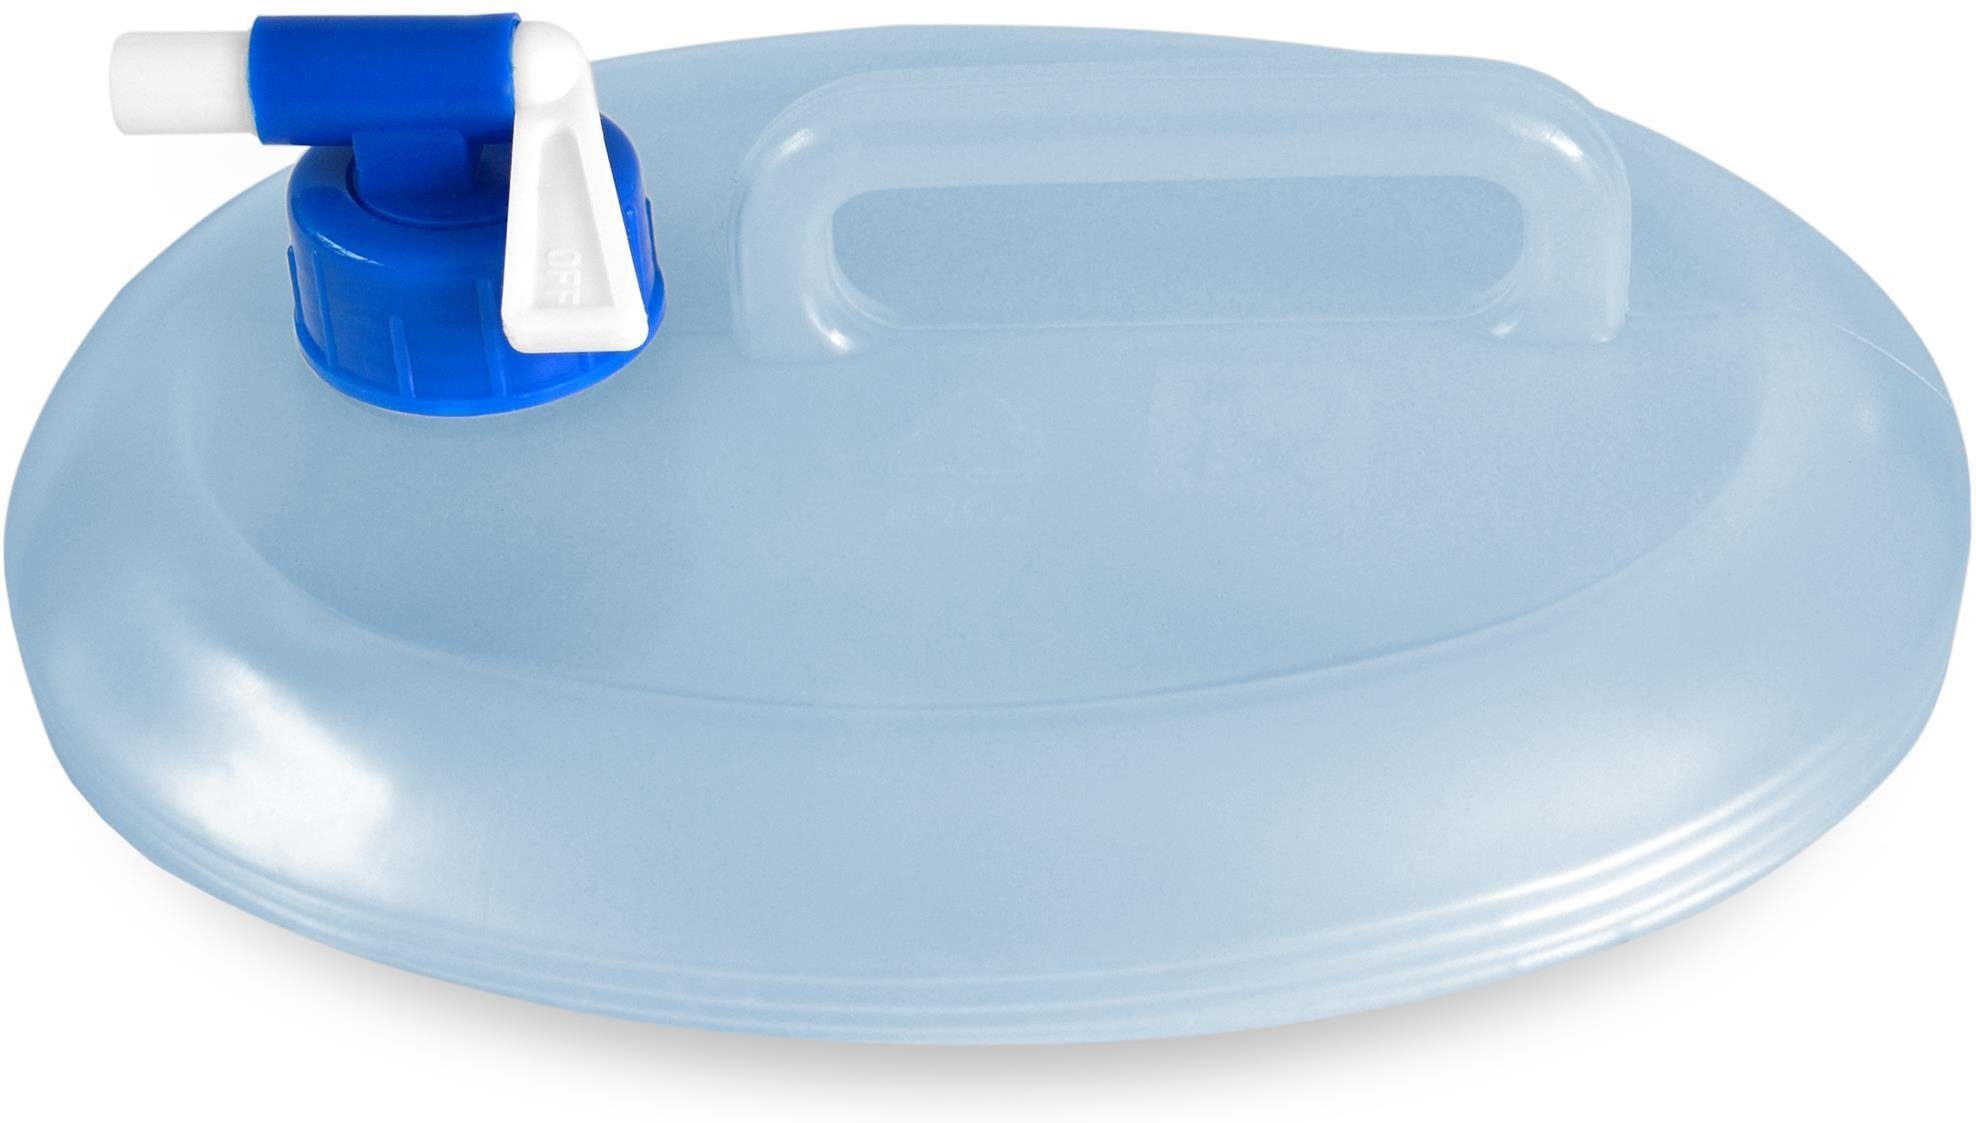 Yuancan Kanister Lebensmittelecht Liter normani Wasserbehälter 10 St), Faltbarer Faltkanister Falteimer - Hahn Wasserkanister Trinkwasserkanister mit (1